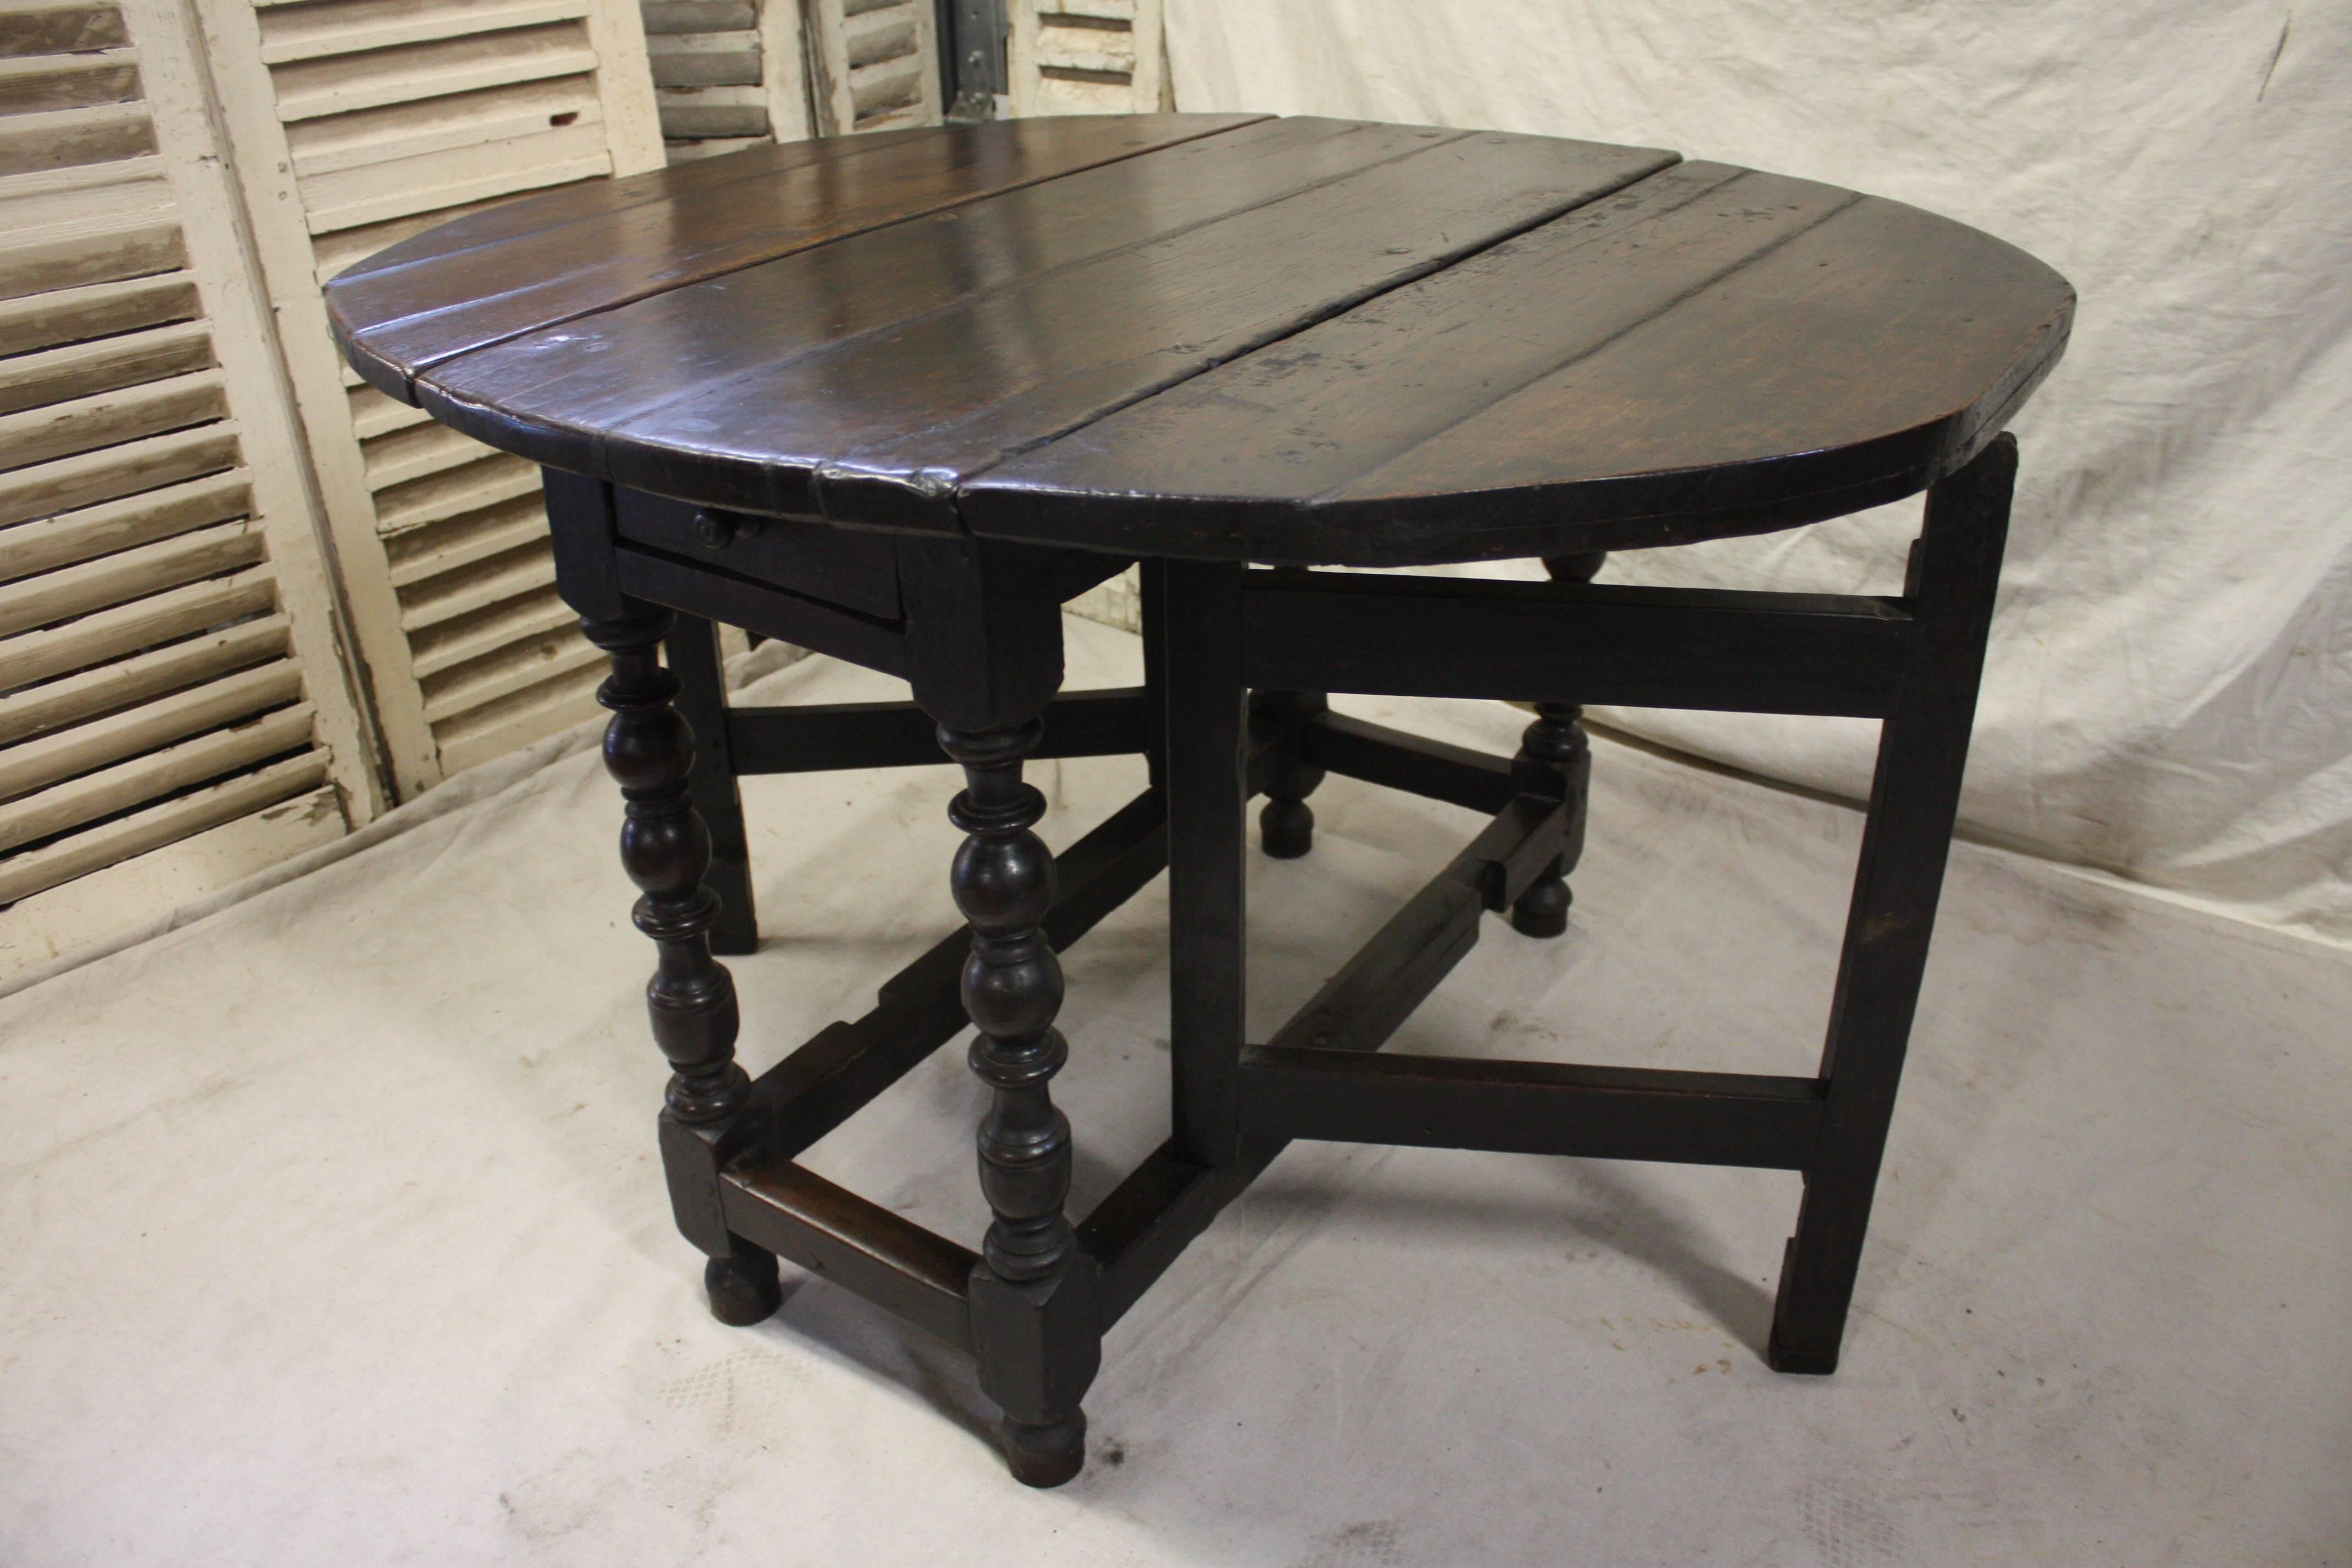 17th century French Gateleg table.